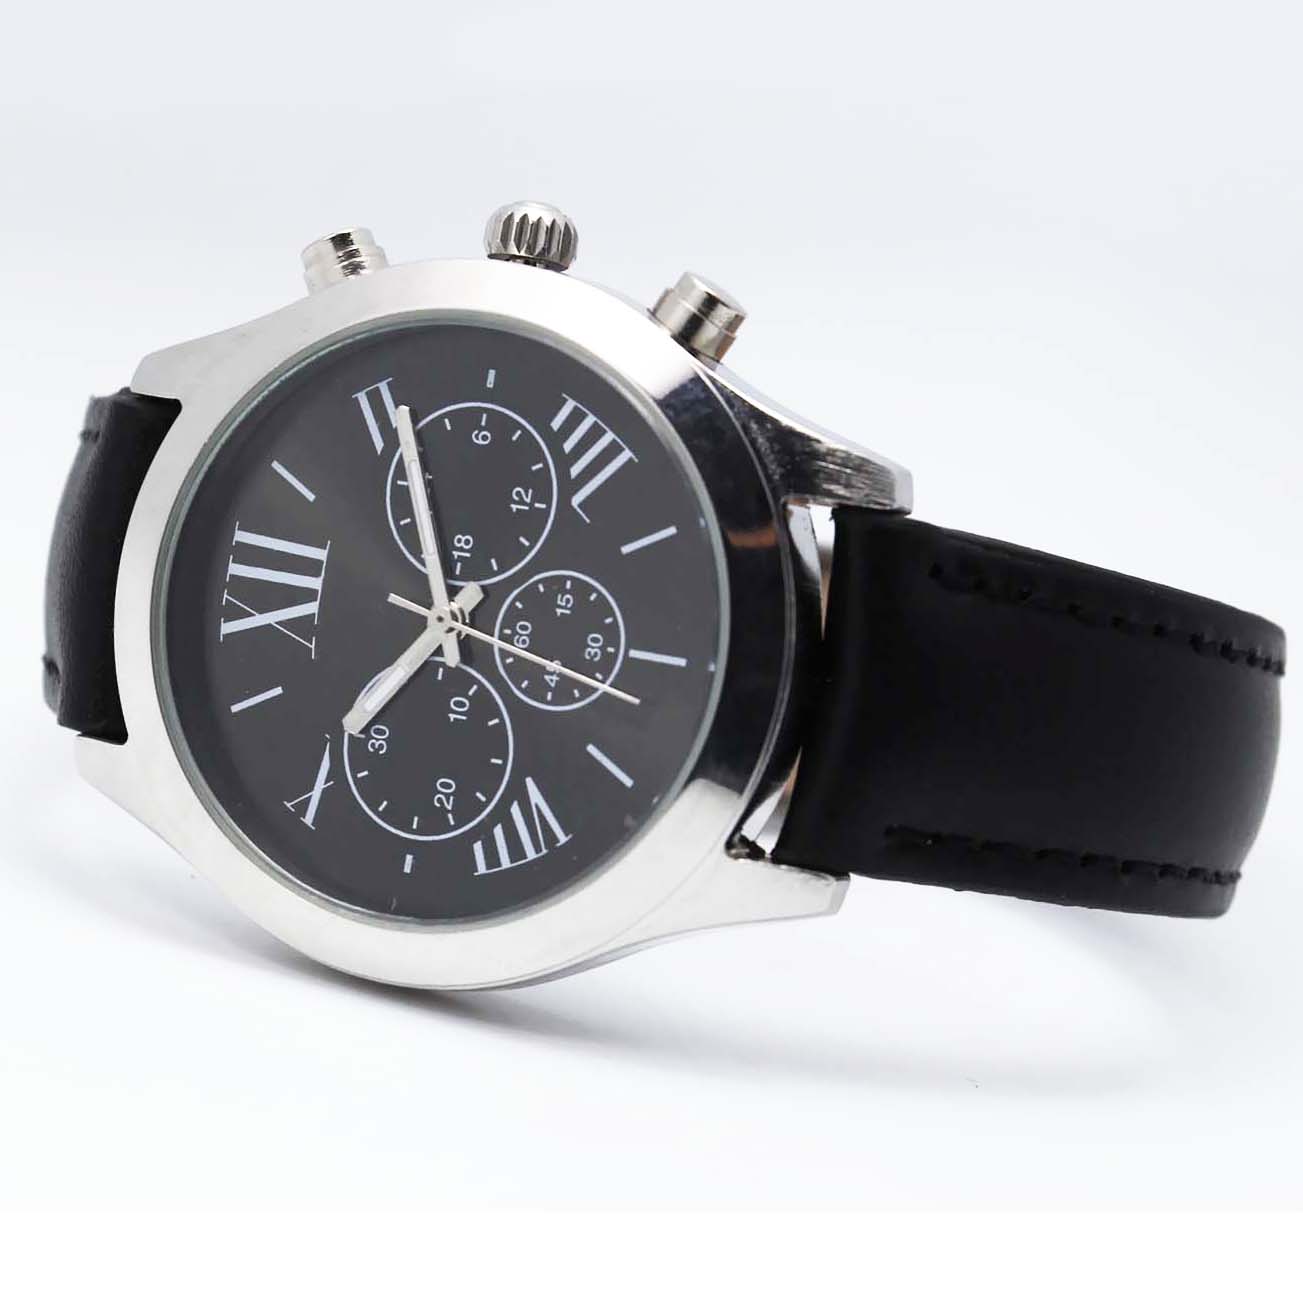 #02137Men's wristwatch quartz analog leather strap watch